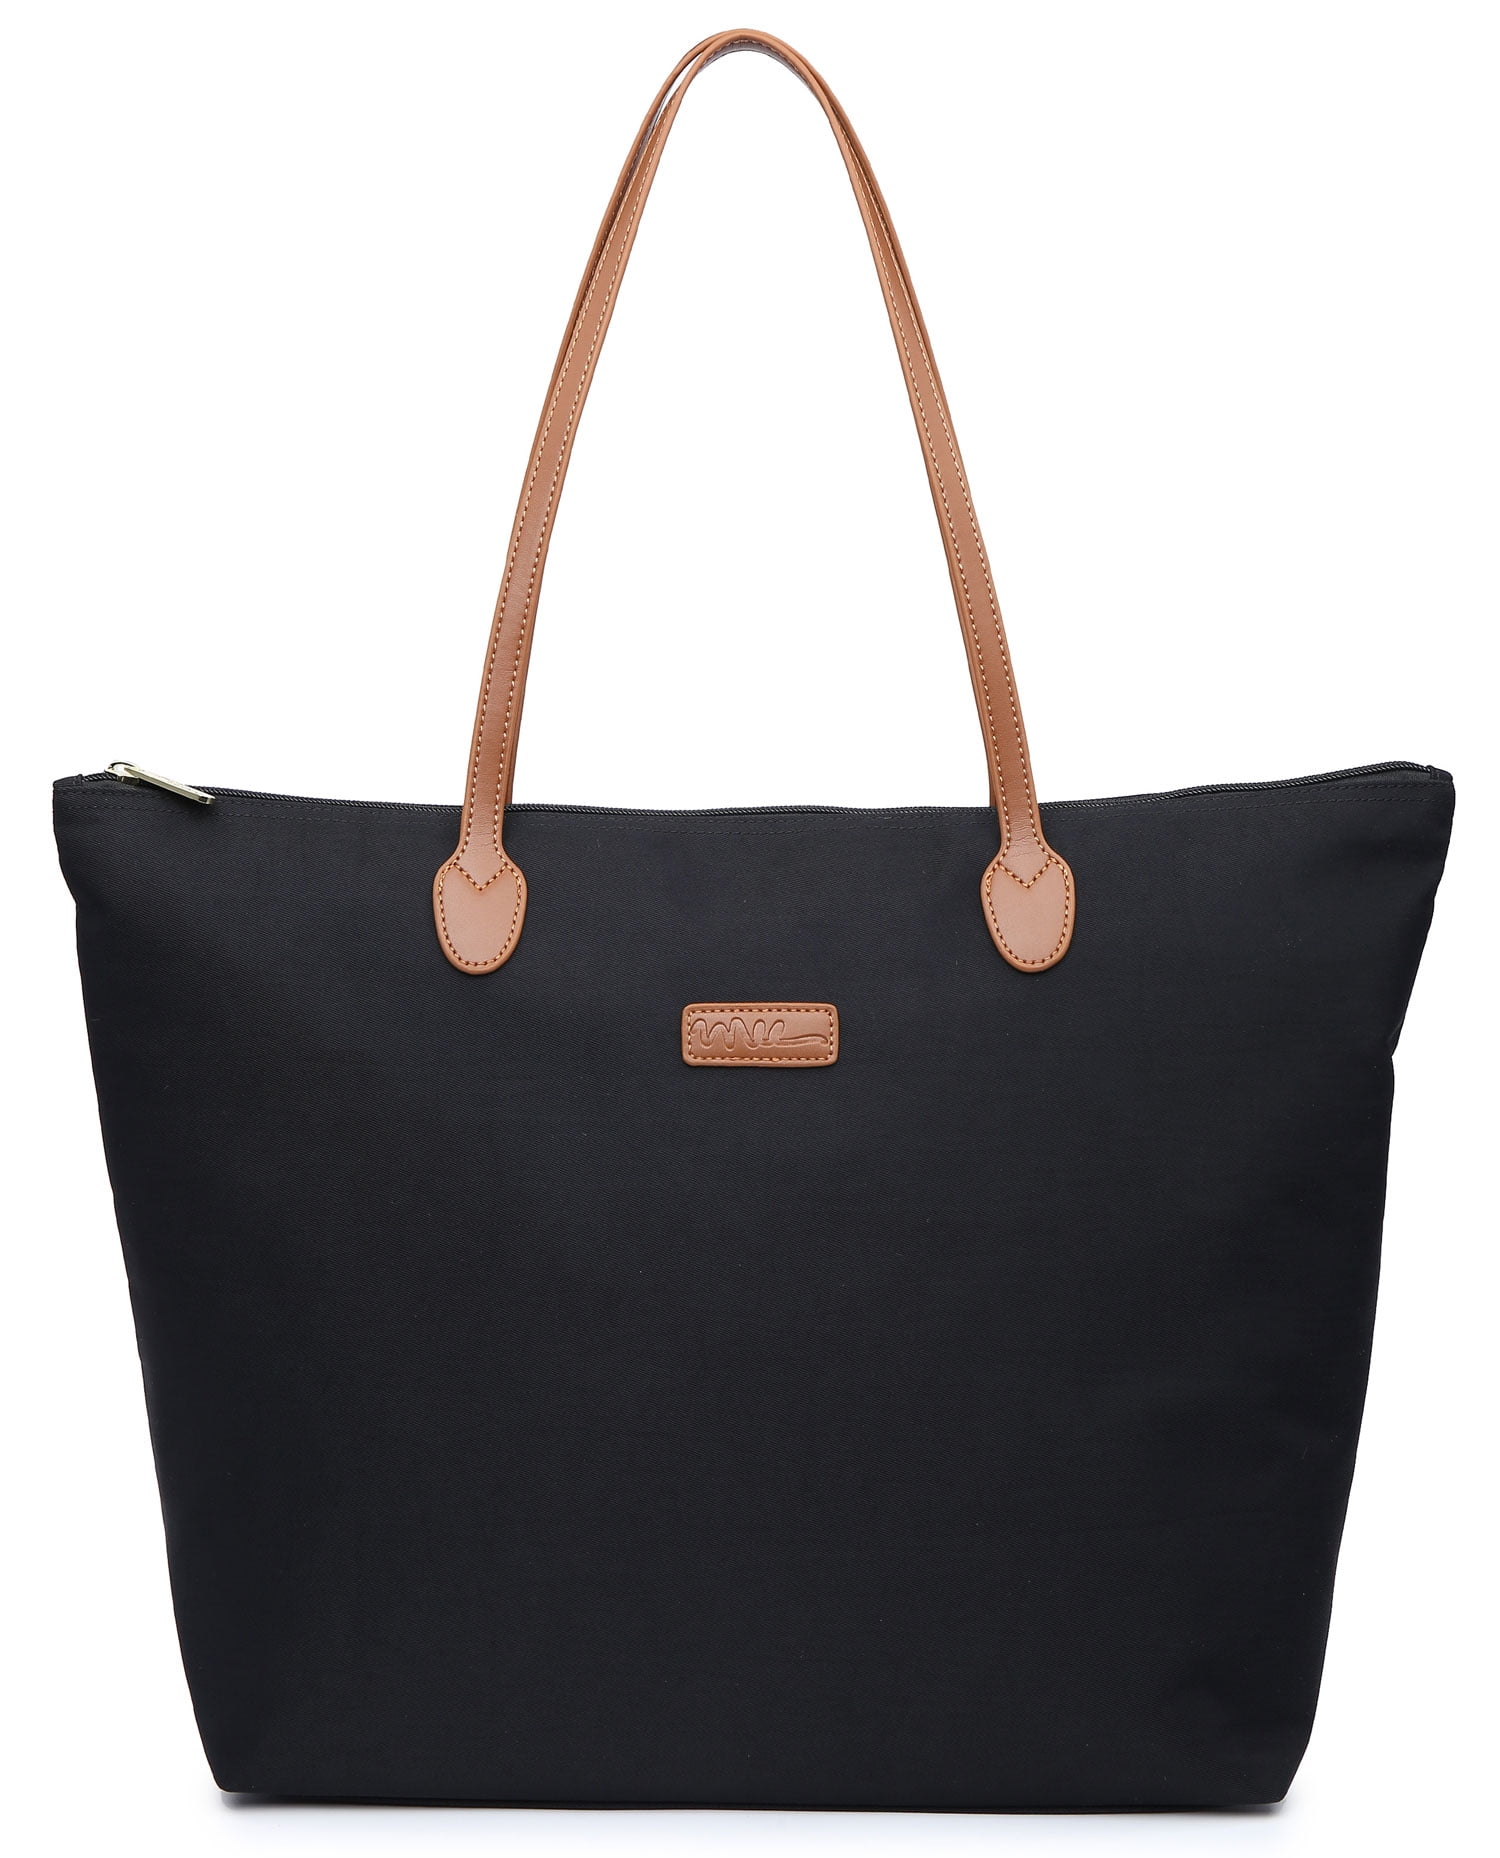 NNEE Water Resistant Light Weight Nylon Tote Bag Handbag - Large Black ...